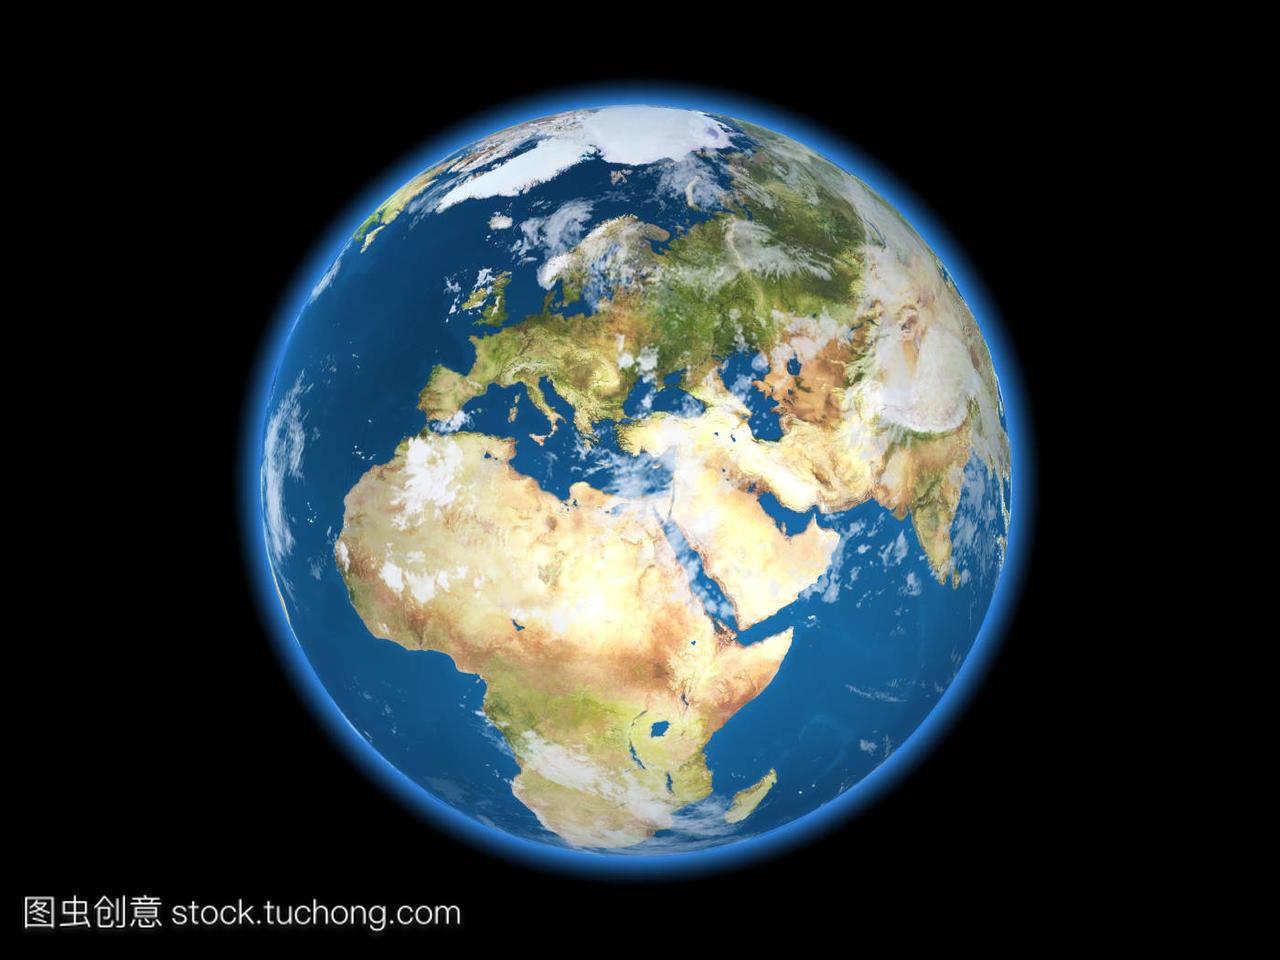 环境,ENVIRONMENT,enviroment,地球仪,Globe,行星,planet,地球,earth,世界,WORLD,全球,Global,蓝色,blue,宇宙,universe,亚洲,Asia,非洲,Africa,欧洲,Europe,space,Atmosphere,environmental protection,环境污染,environmental pollution,That,全球化,globalization,天气,climate,hothouse,洲,continents,陆地,continent,温室效应,greenhouse effect,Cloud layer,stratosphere,blueness,气候变化,climate change,云层,clouds,erdatmosph?re,Treibhausgas,erderw?rmung,FCKW,blaue,Panther